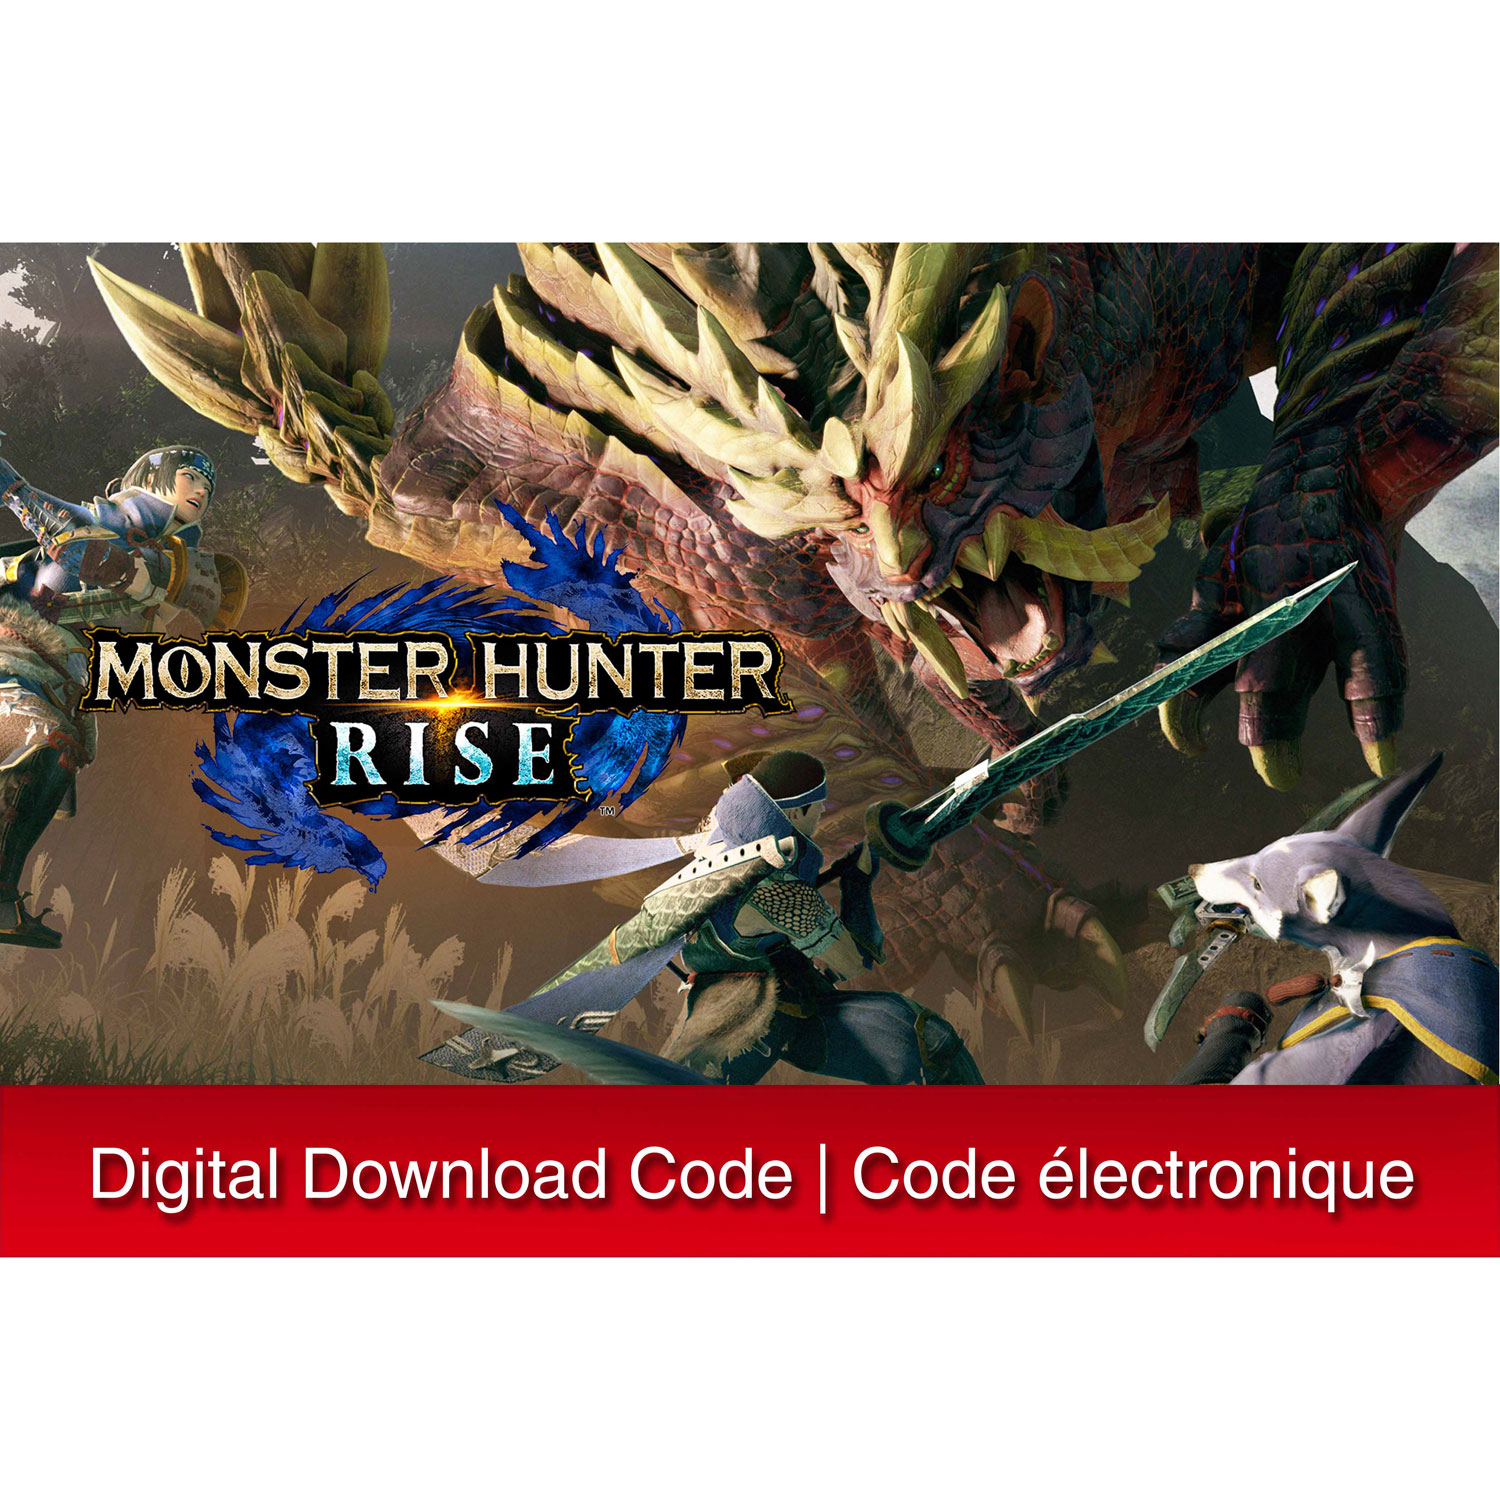 Monster Hunter Rise (Switch) - Digital Download